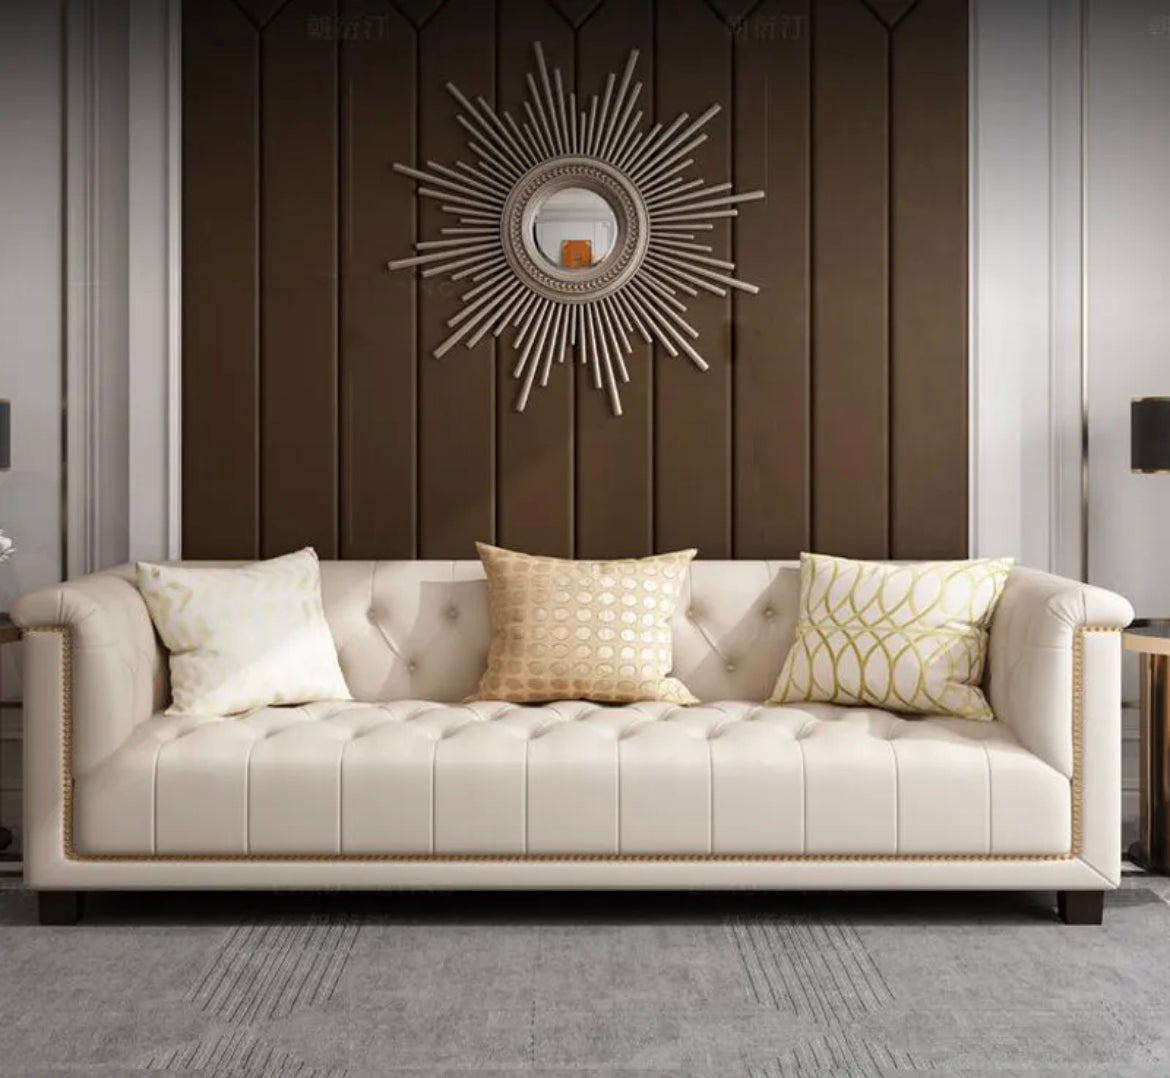 Sofa Classic Chesterfield Design 3 Seater Solid Wood Sofa Living Room Designer Sofa Set